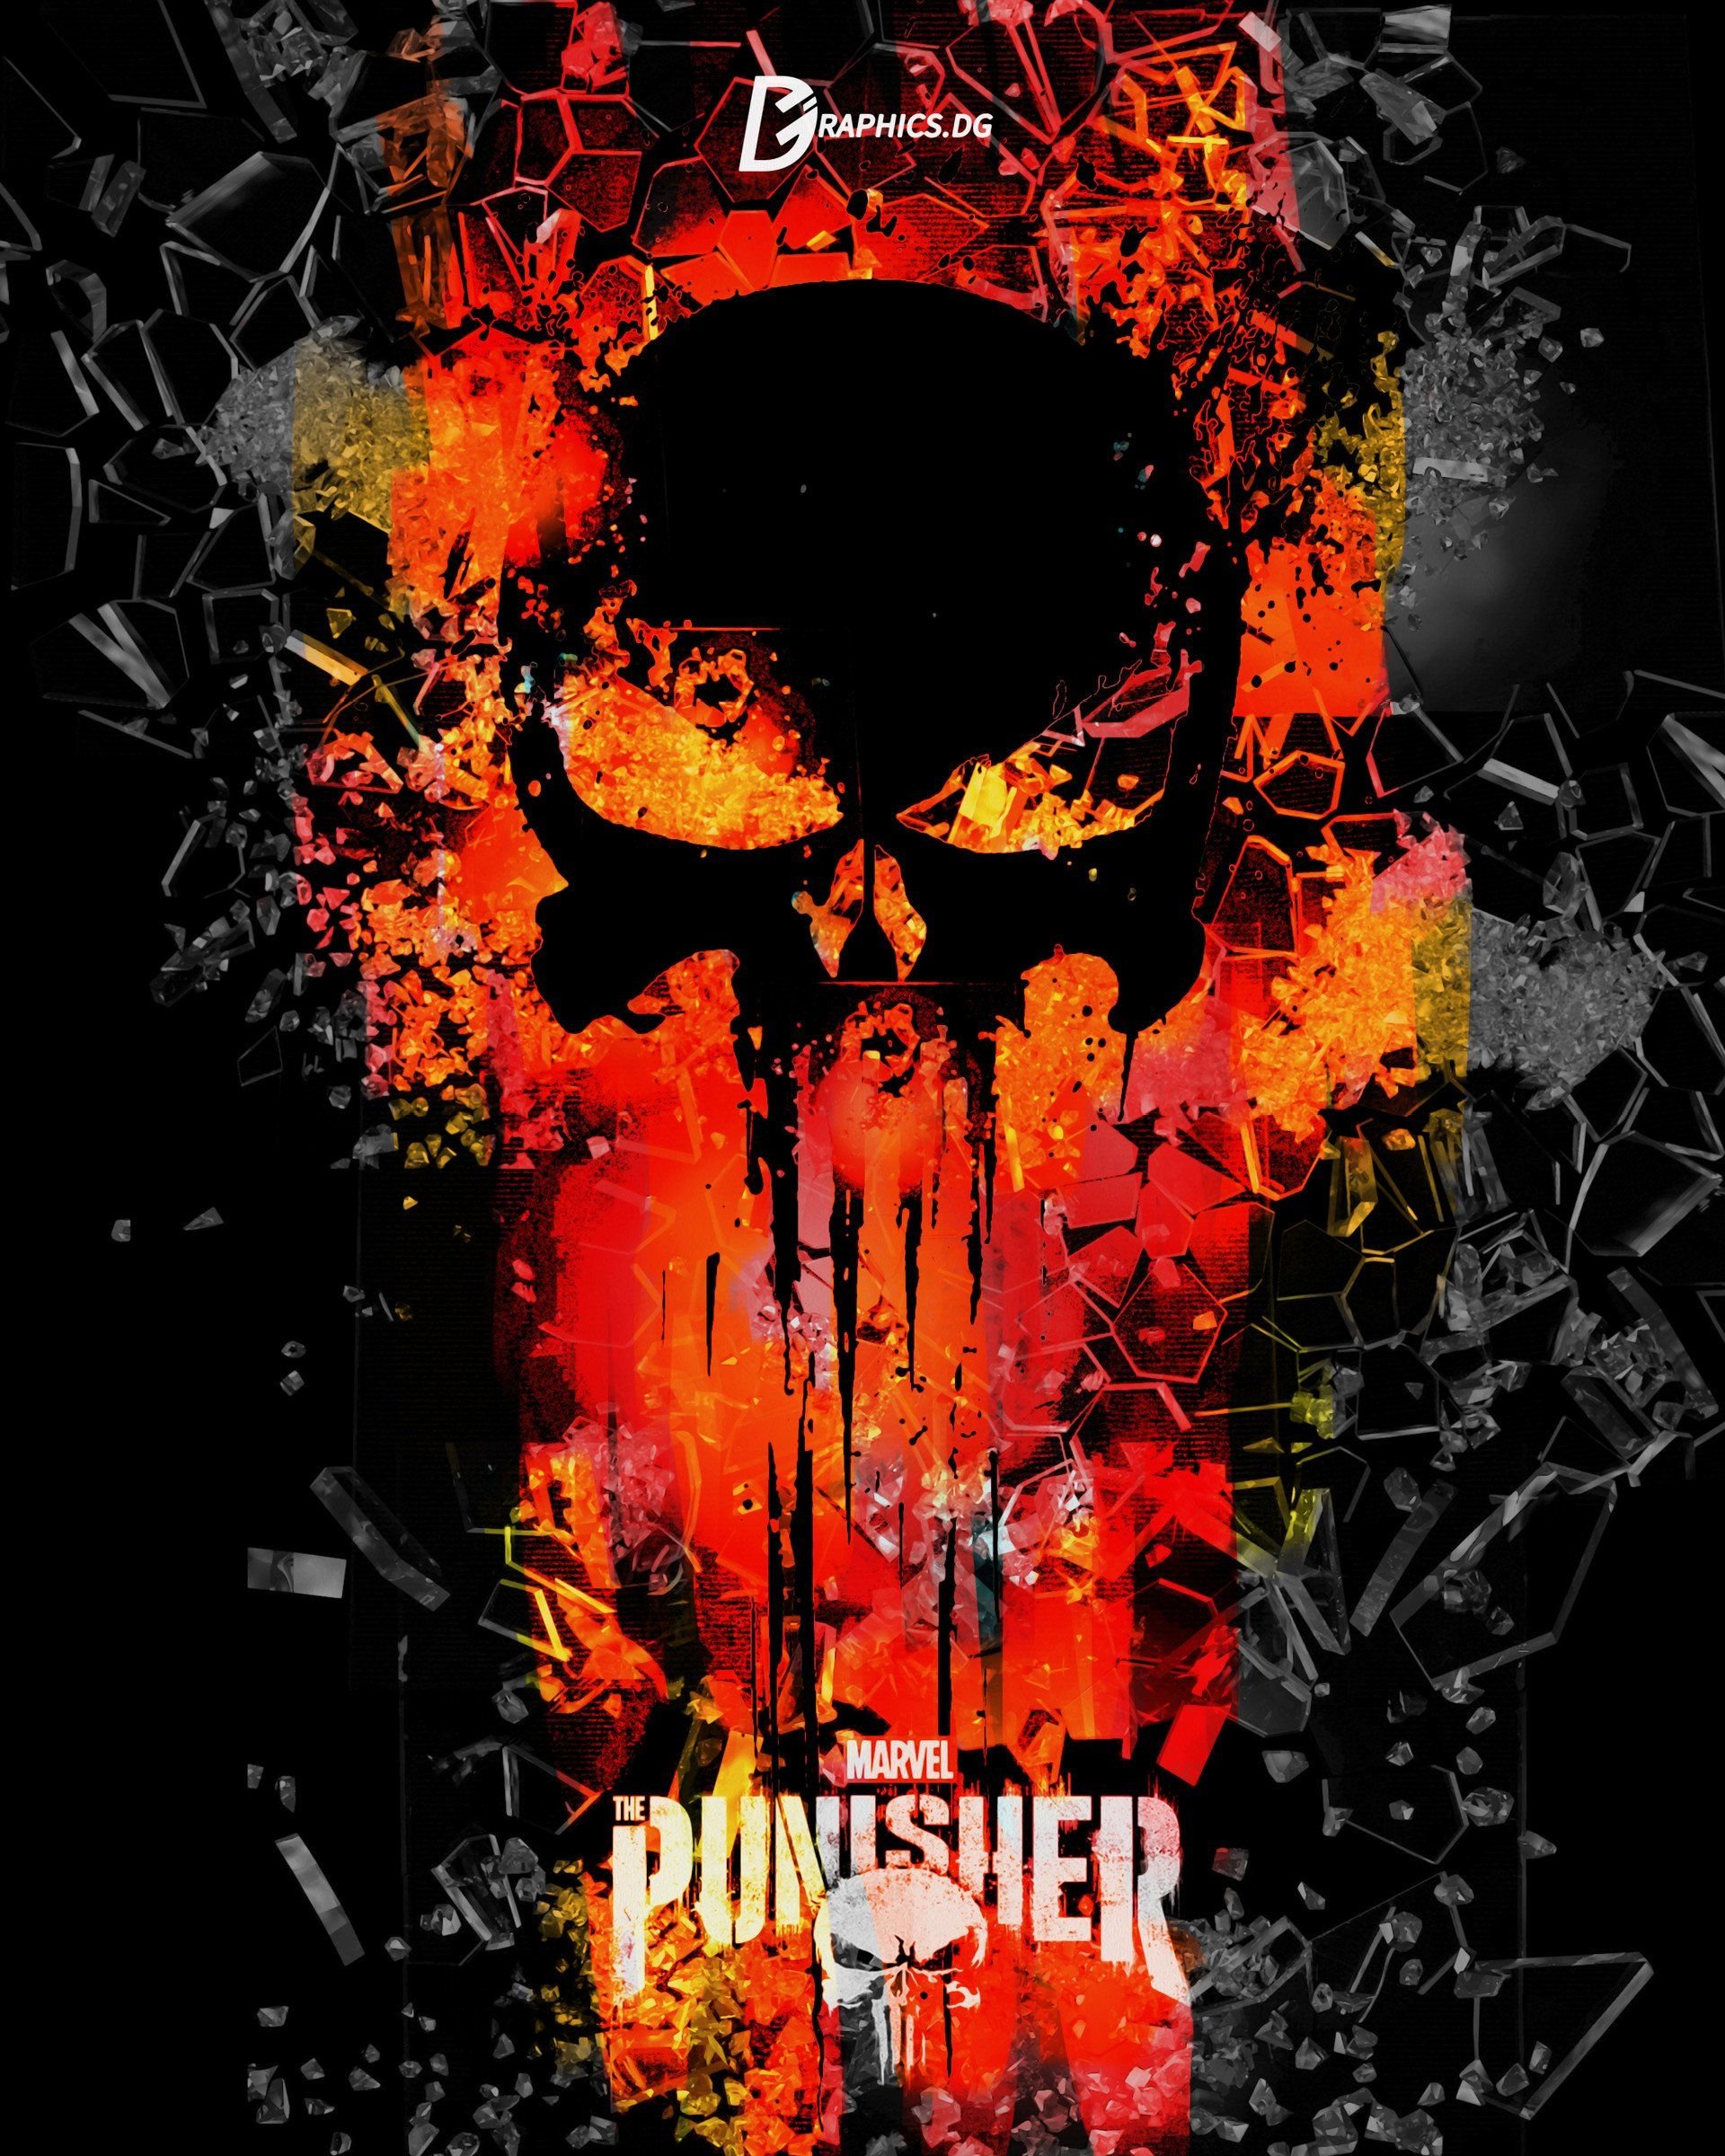 the punisher movie wallpaper